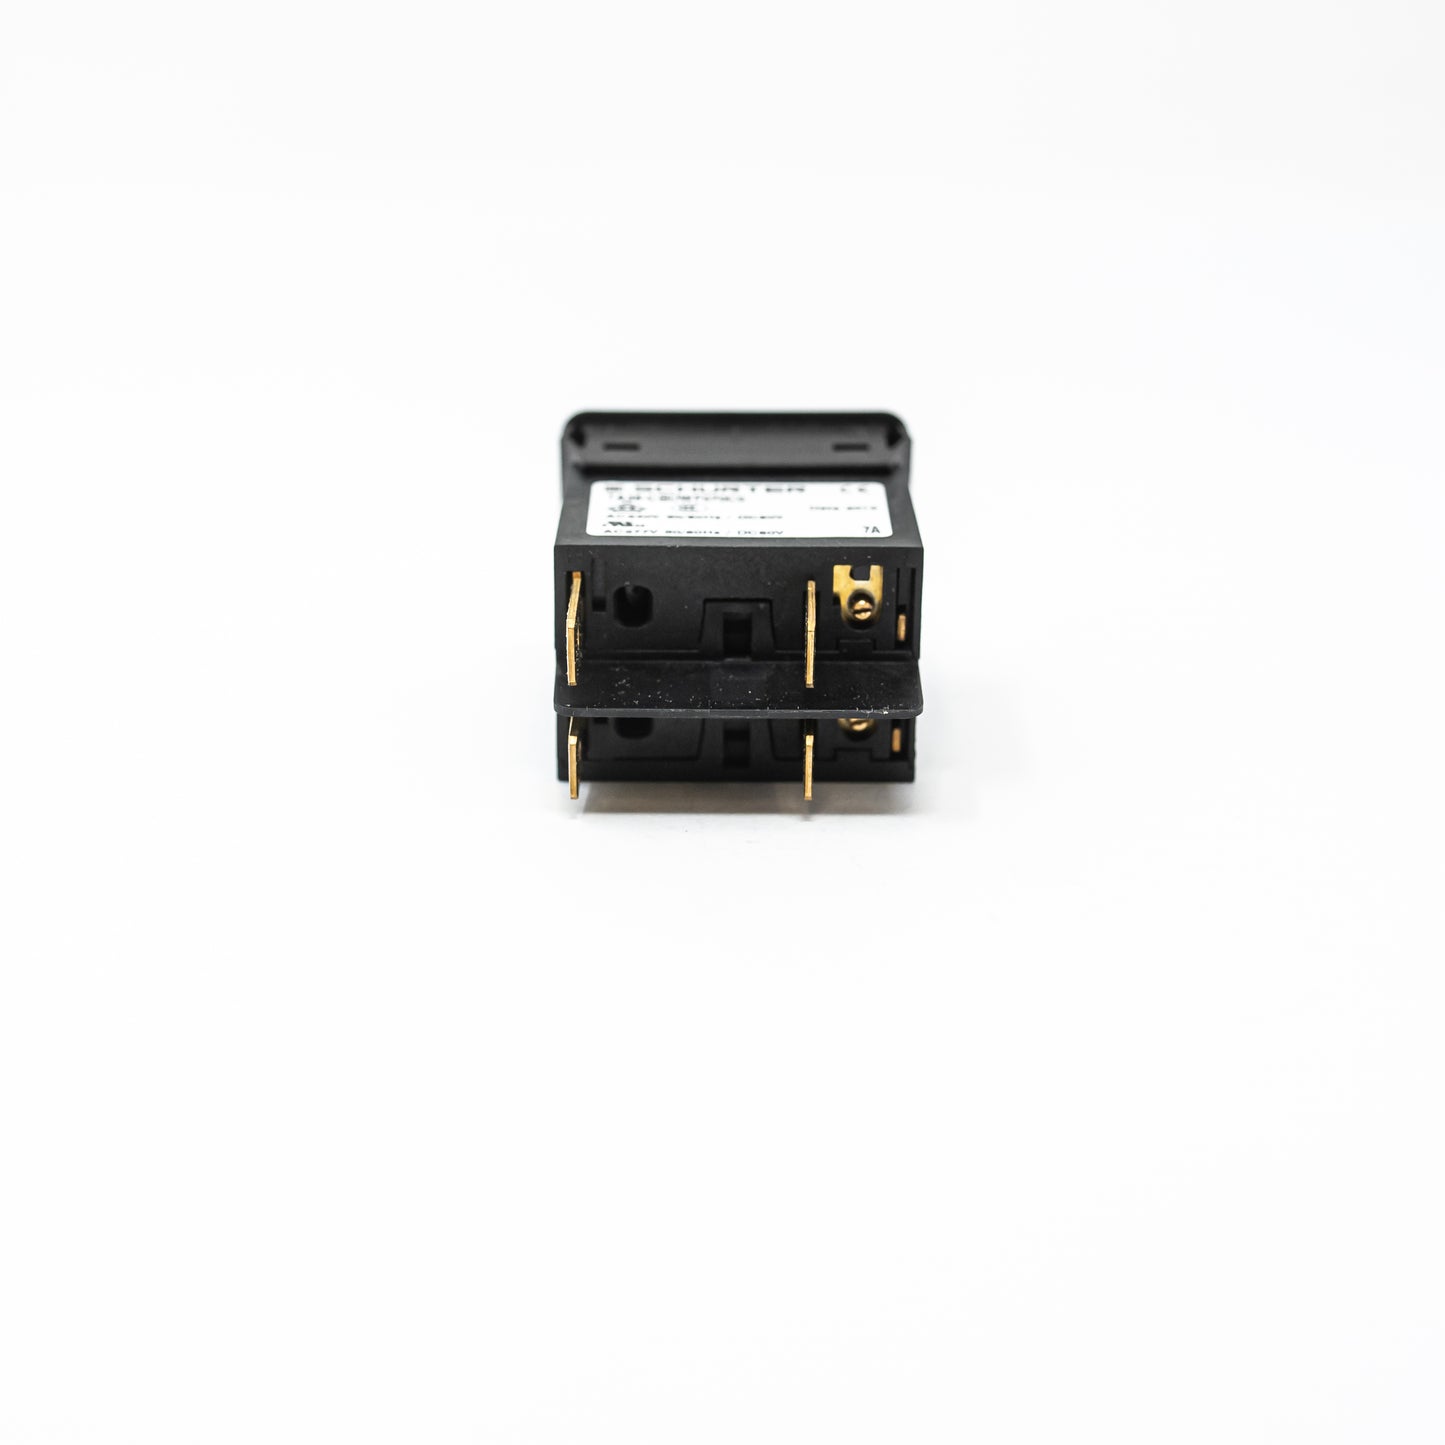 Black circuit breaker box with switch